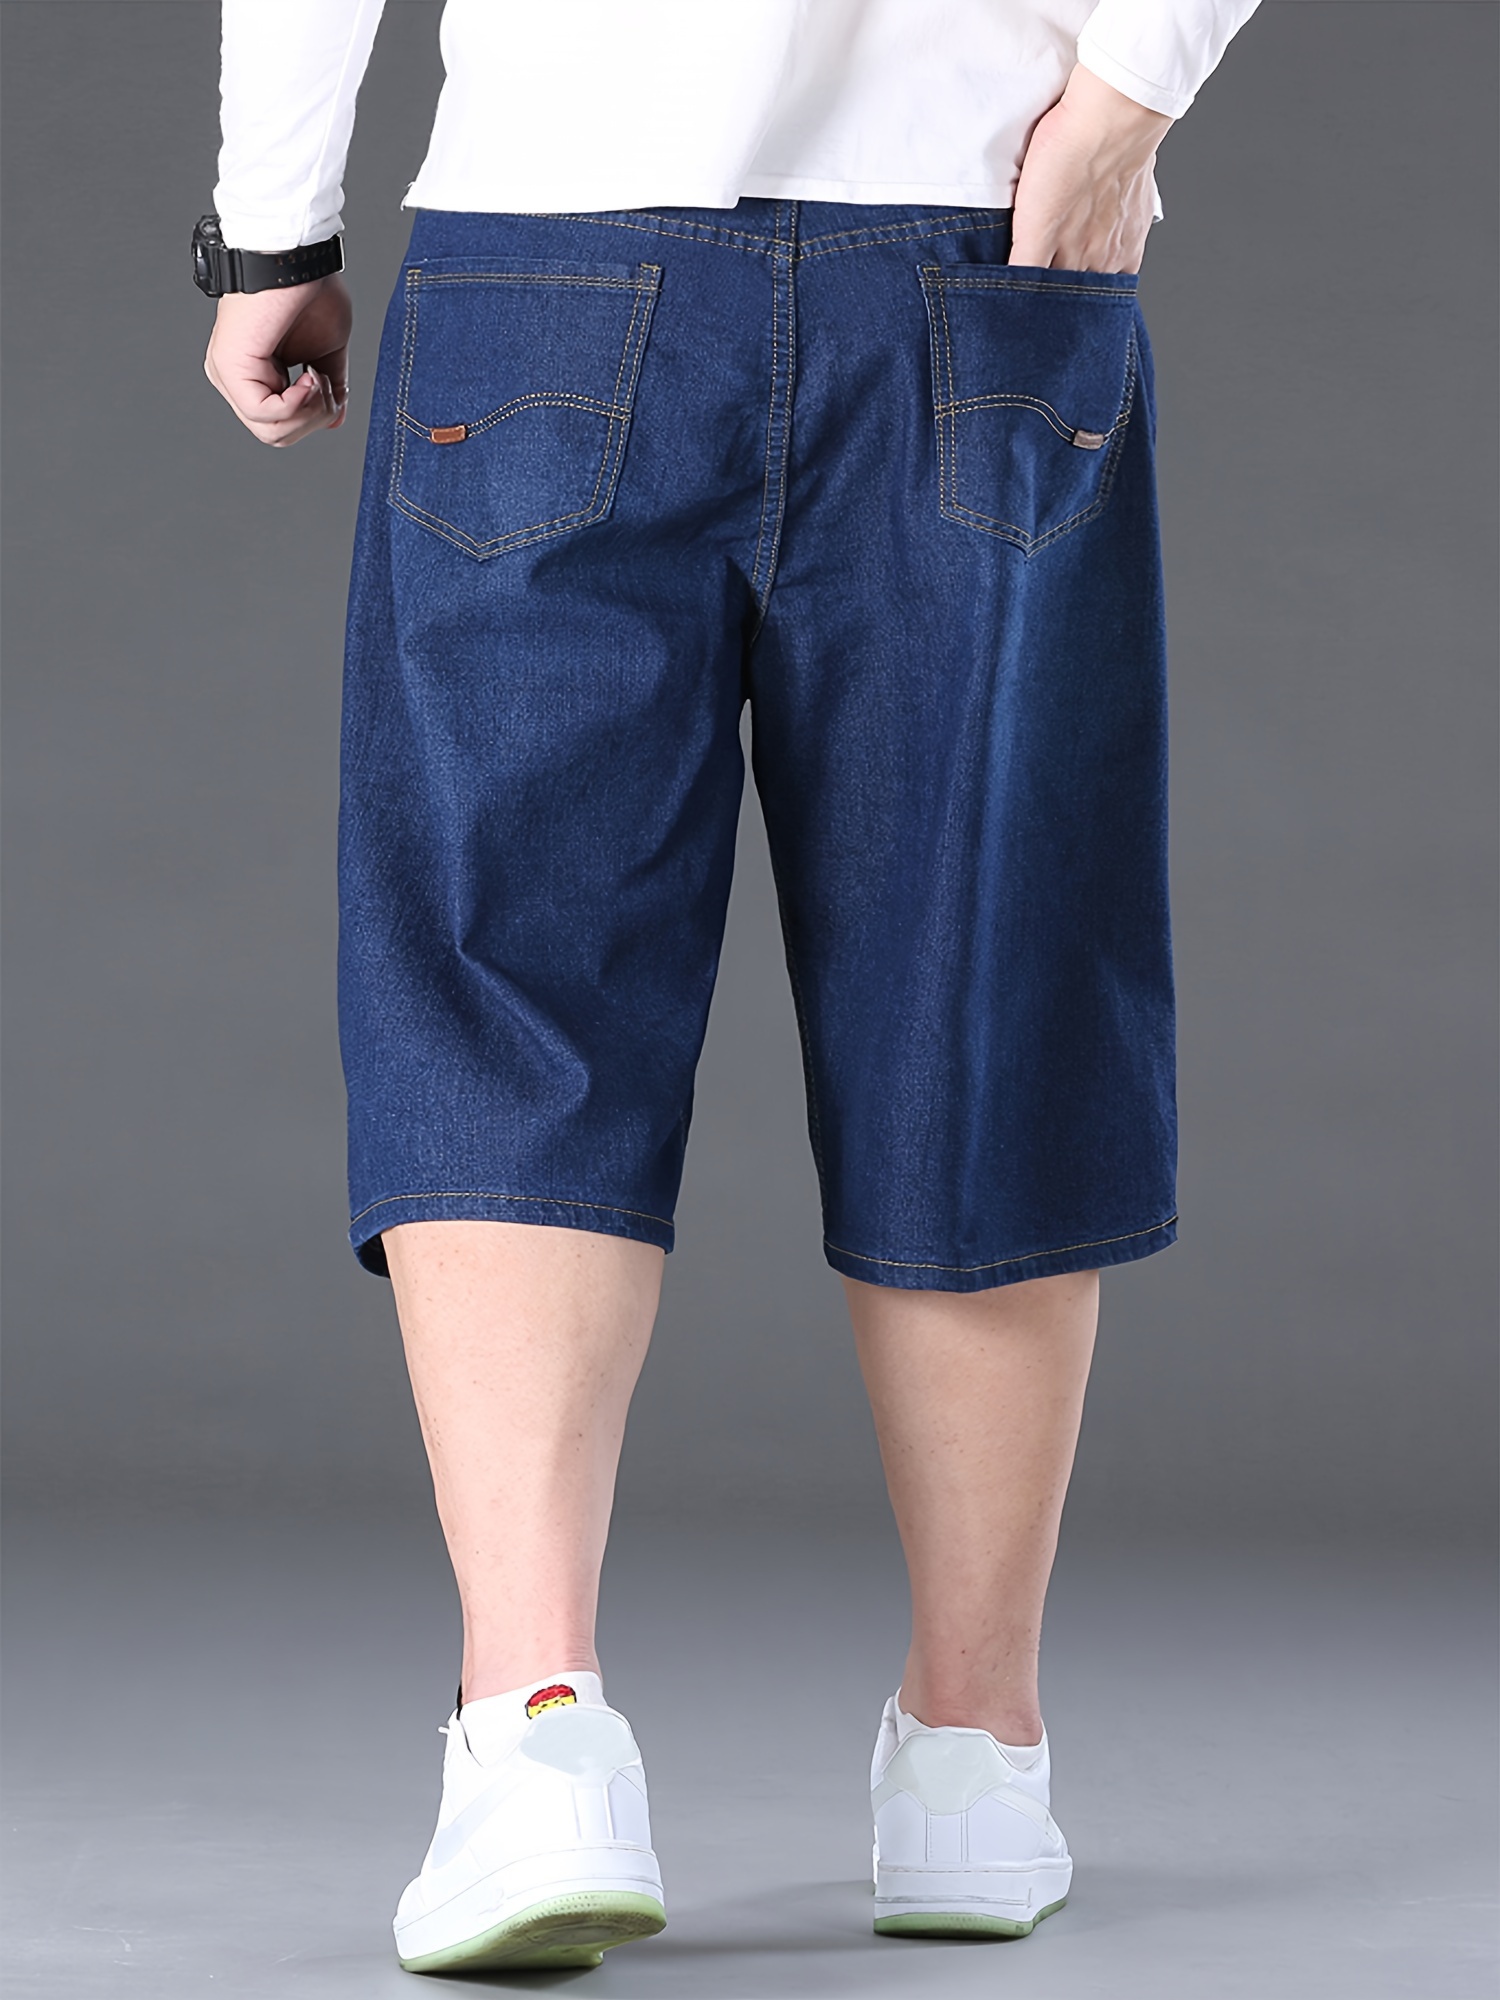 Cool Patch Denim Short  Pantalones con parches, Ropa de hombre, Estilos de  ropa